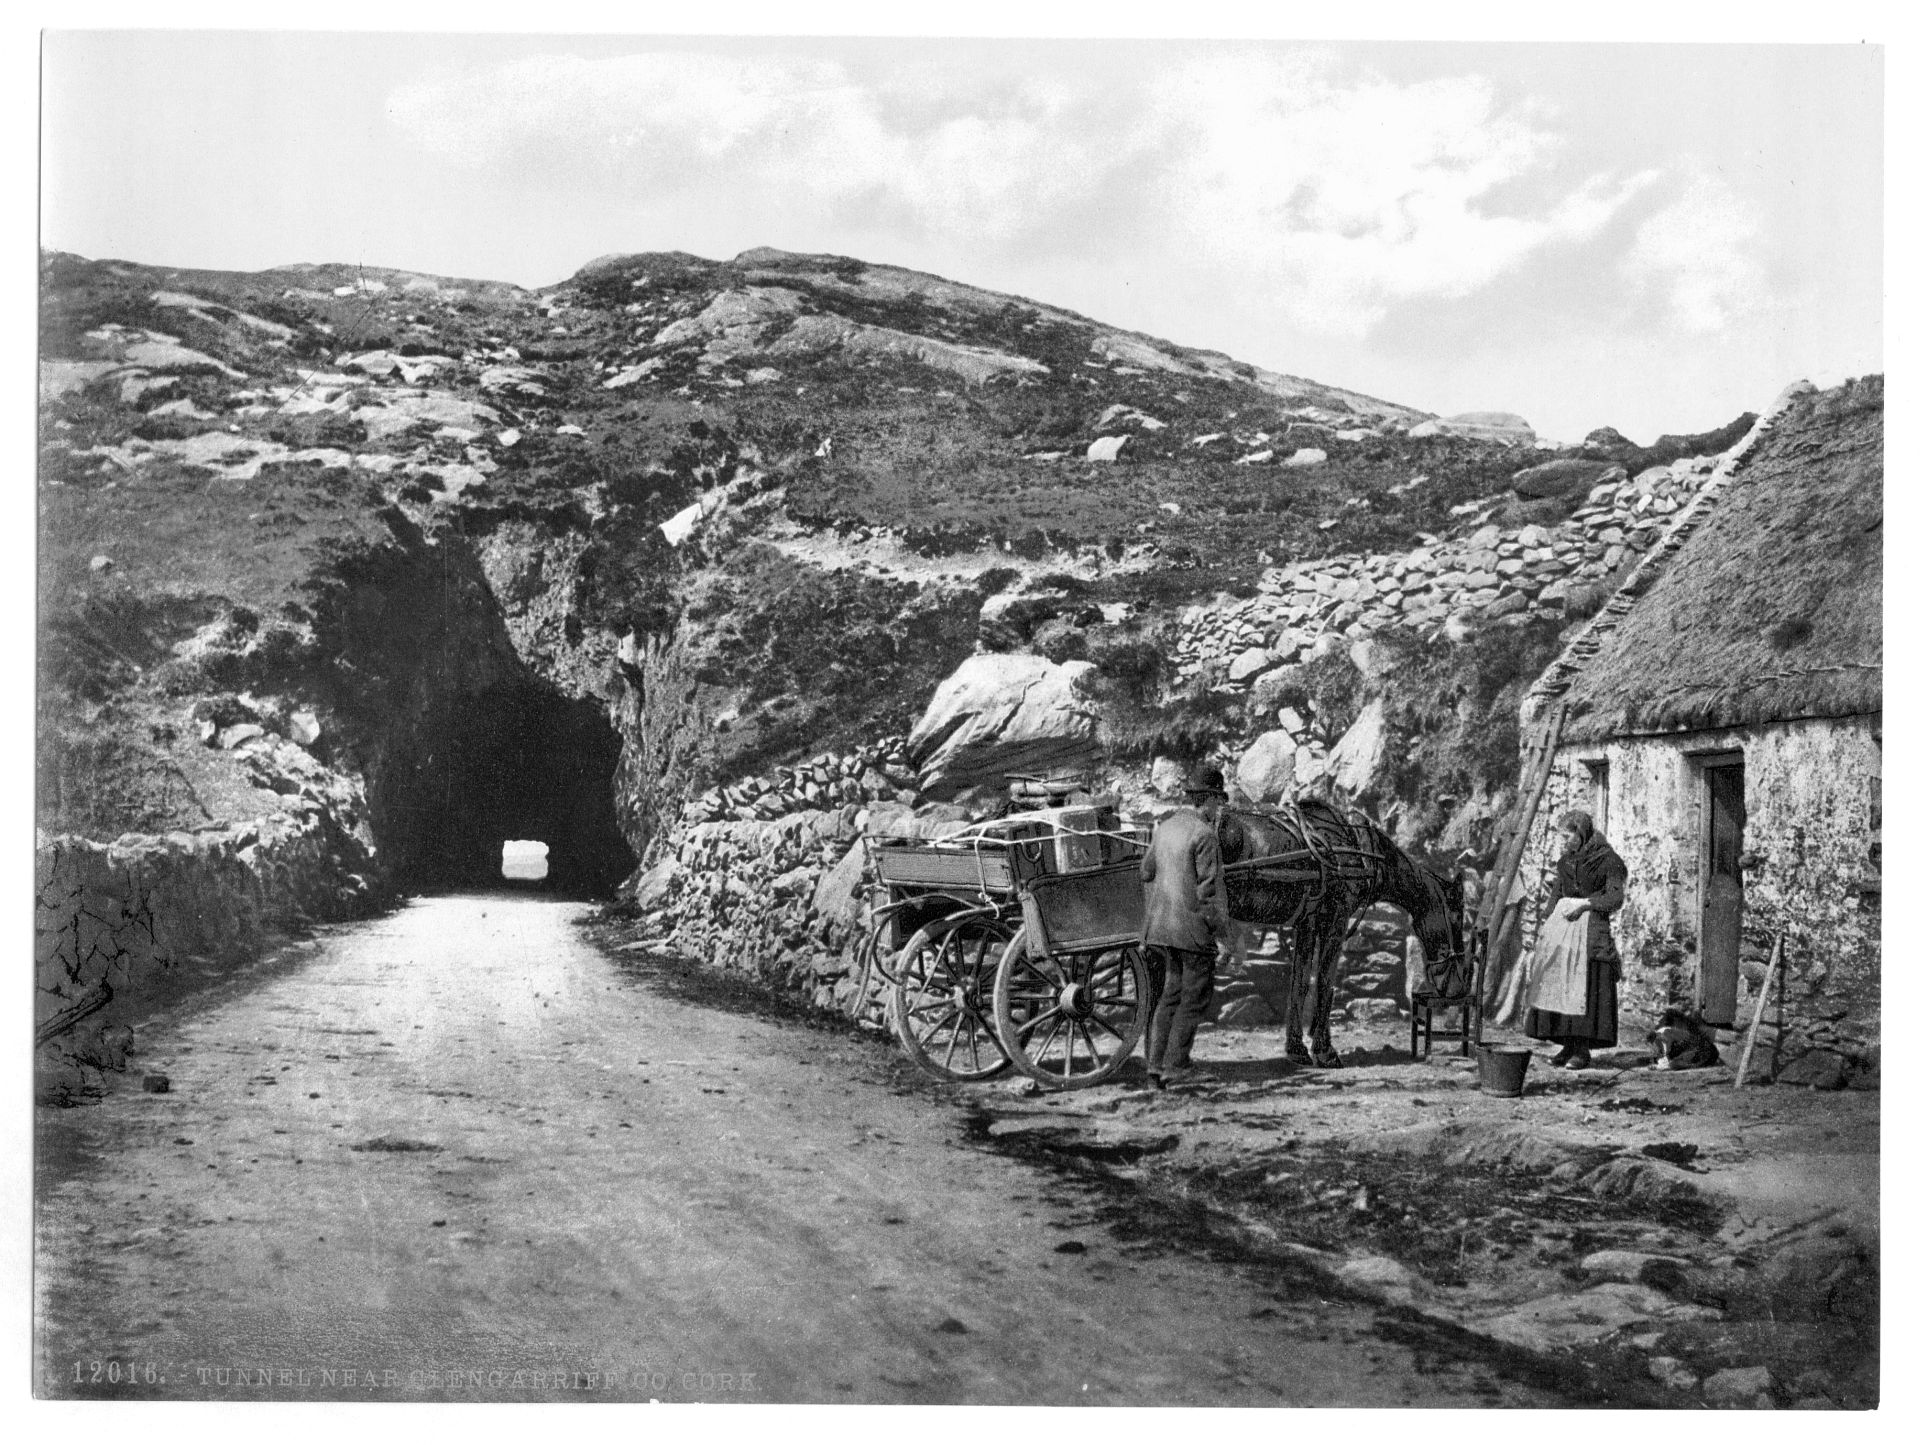 Tunnel near Glengariff. County Cork, Ireland